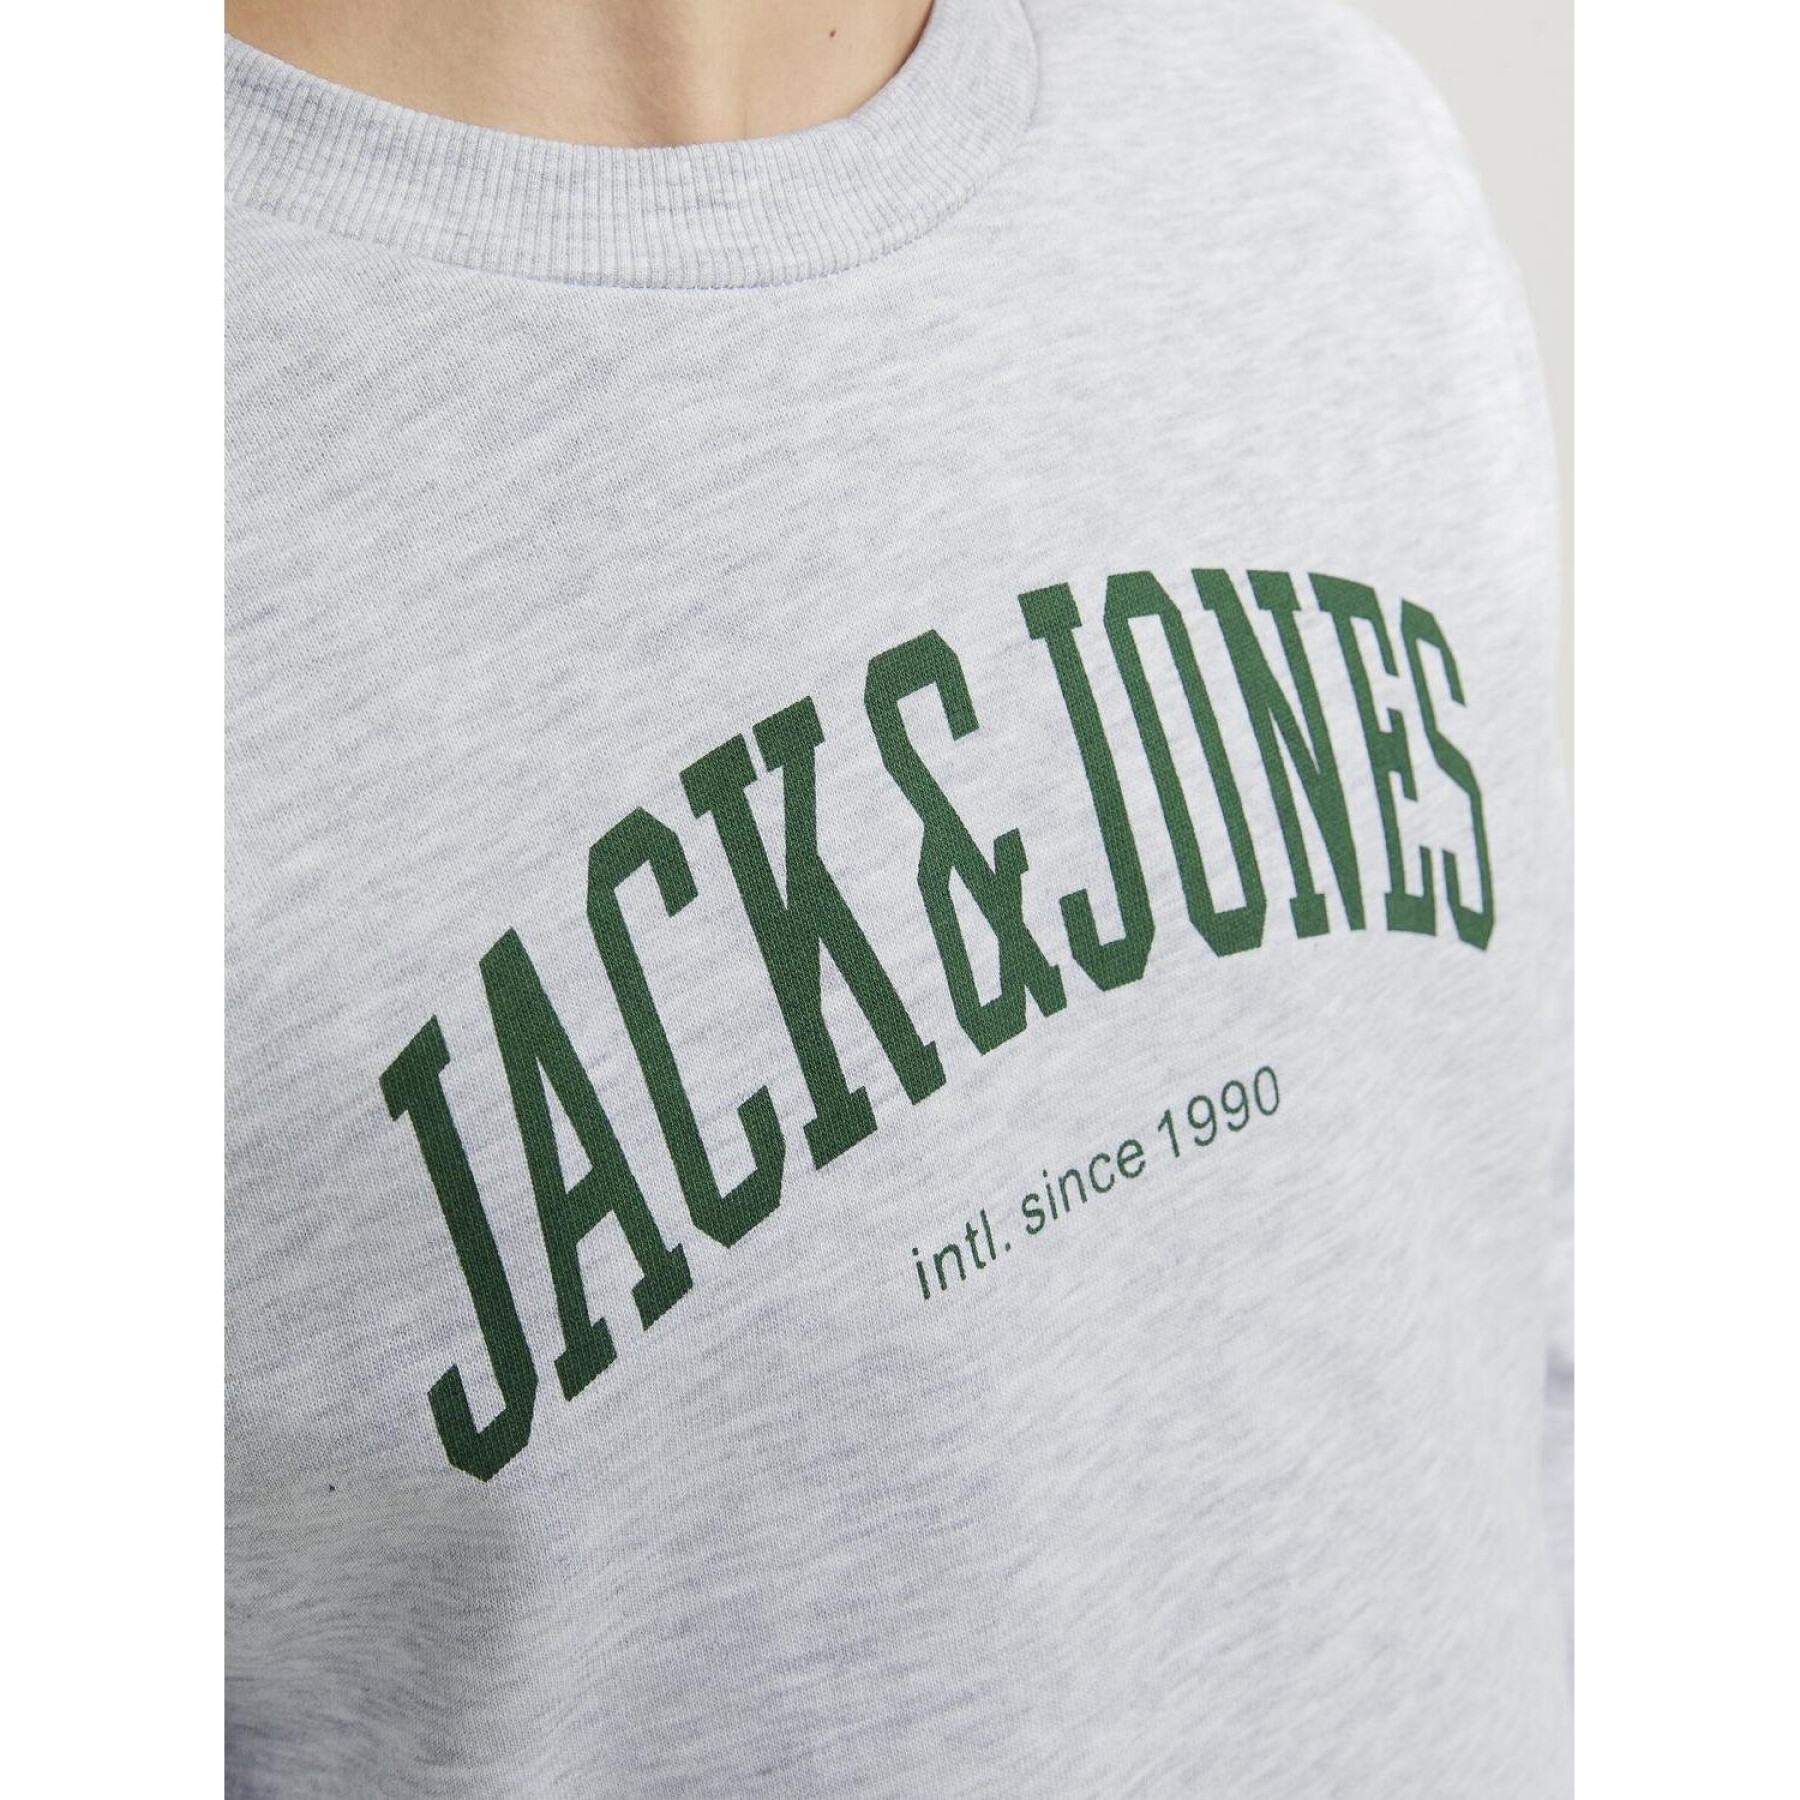 Sweatshirt round neck child Jack & Jones Josh